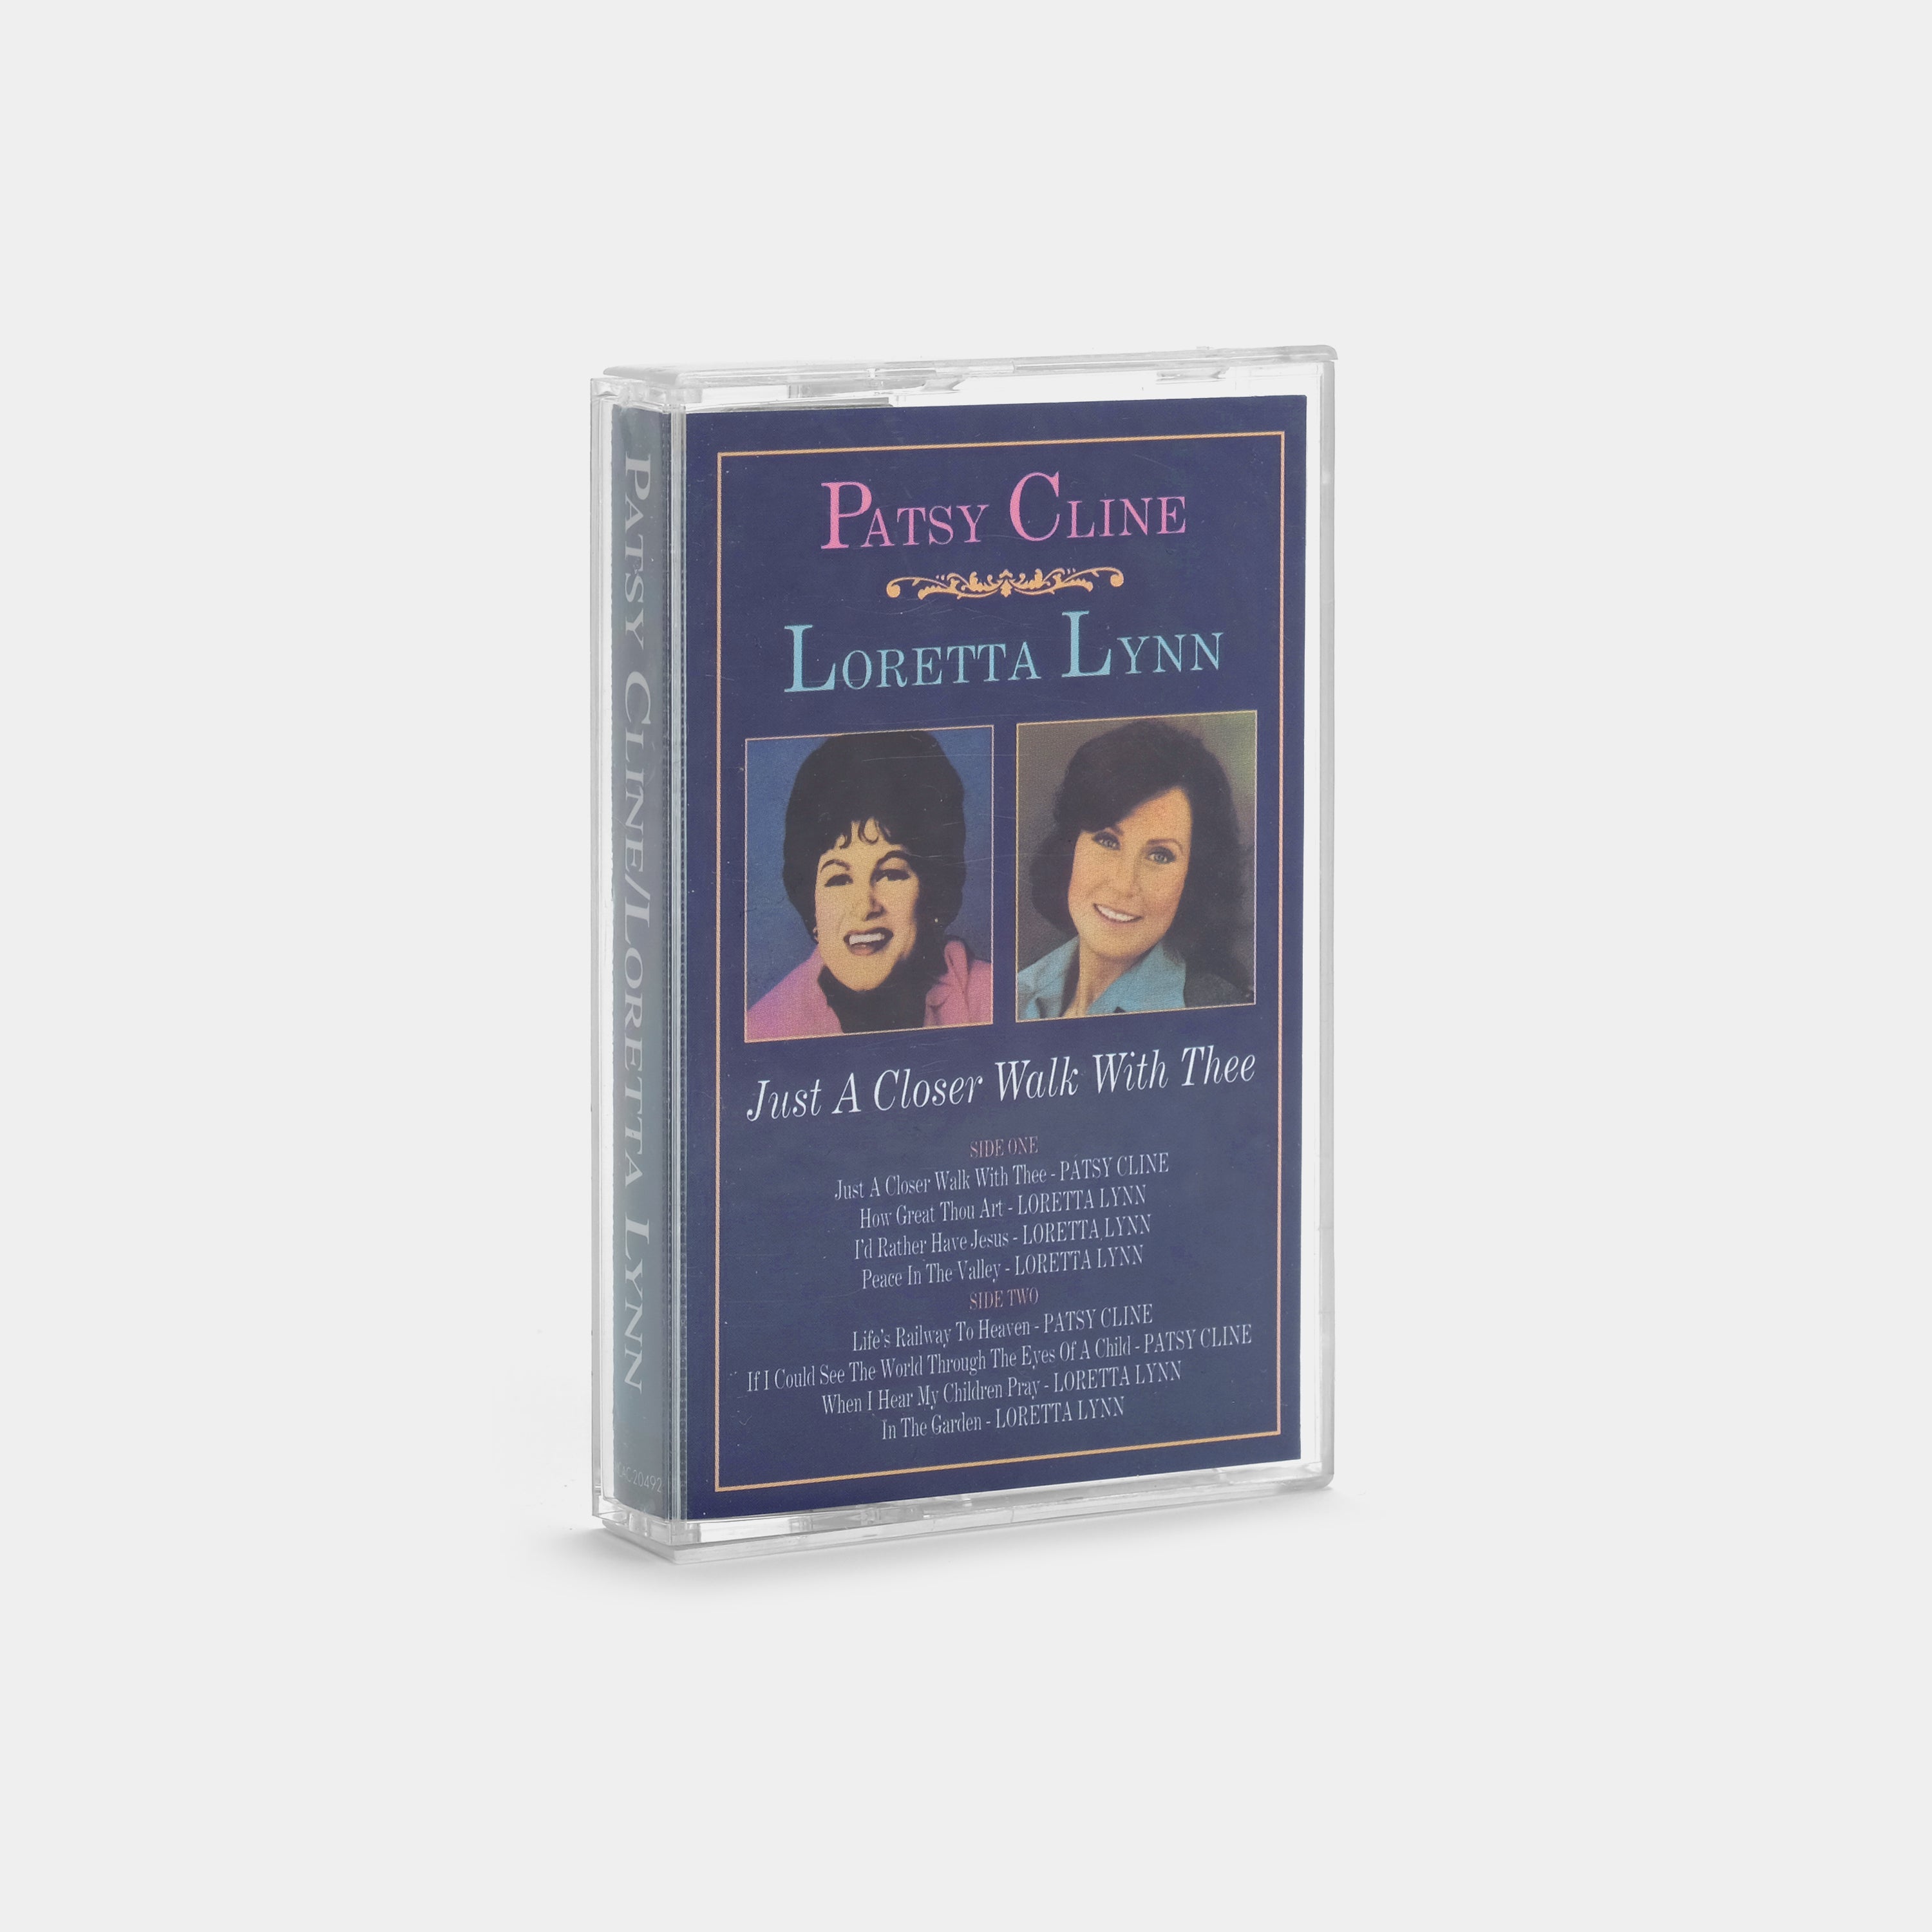 Patsy Cline, Loretta Lynn - Just A Closer Walk With Thee Cassette Tape